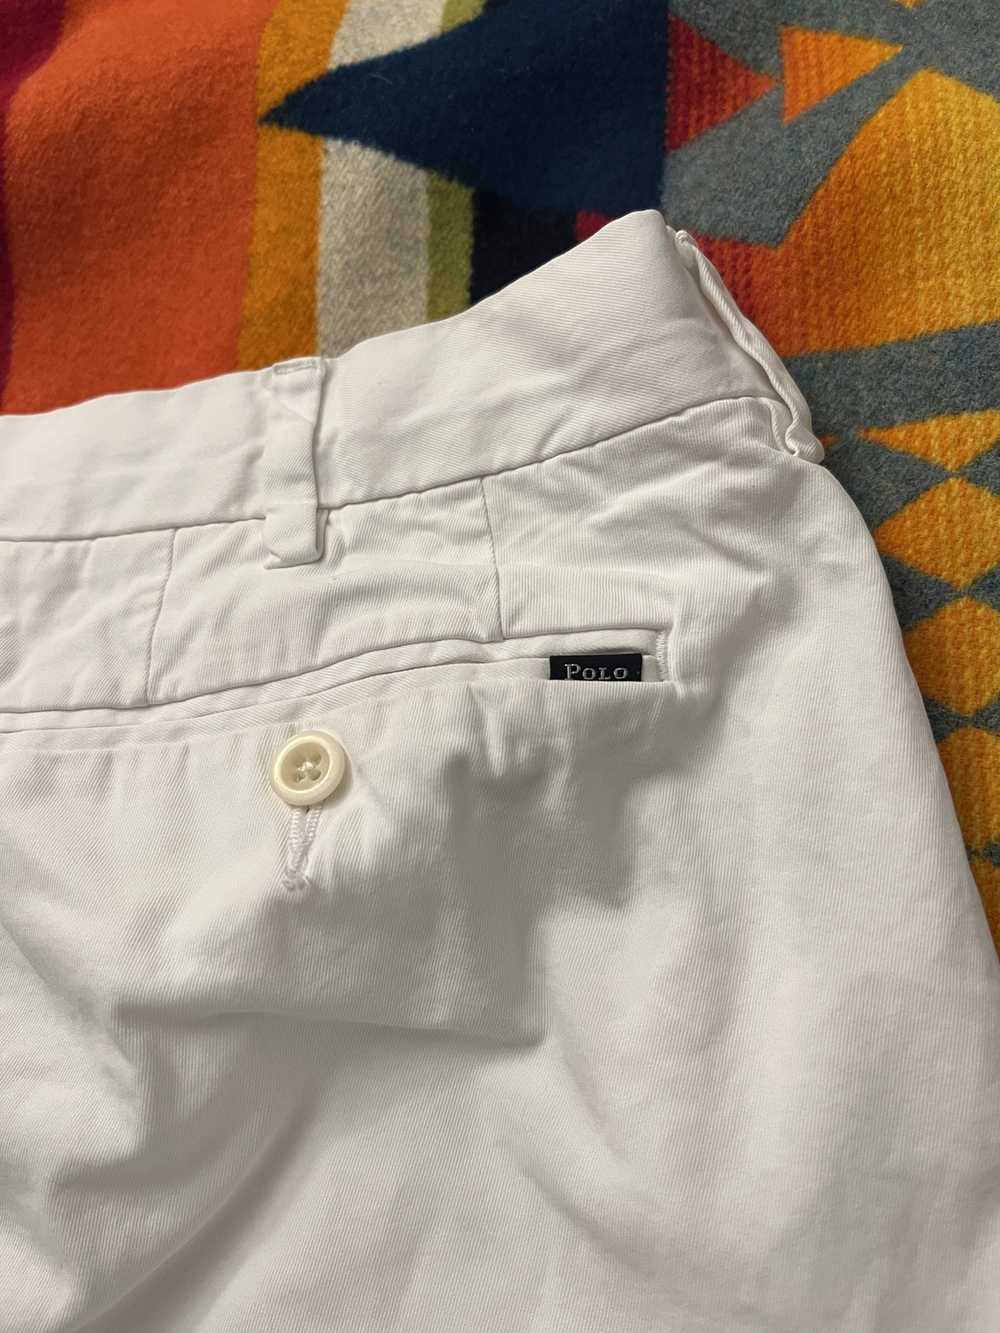 Polo Ralph Lauren Polo White Cotton Shorts - image 4